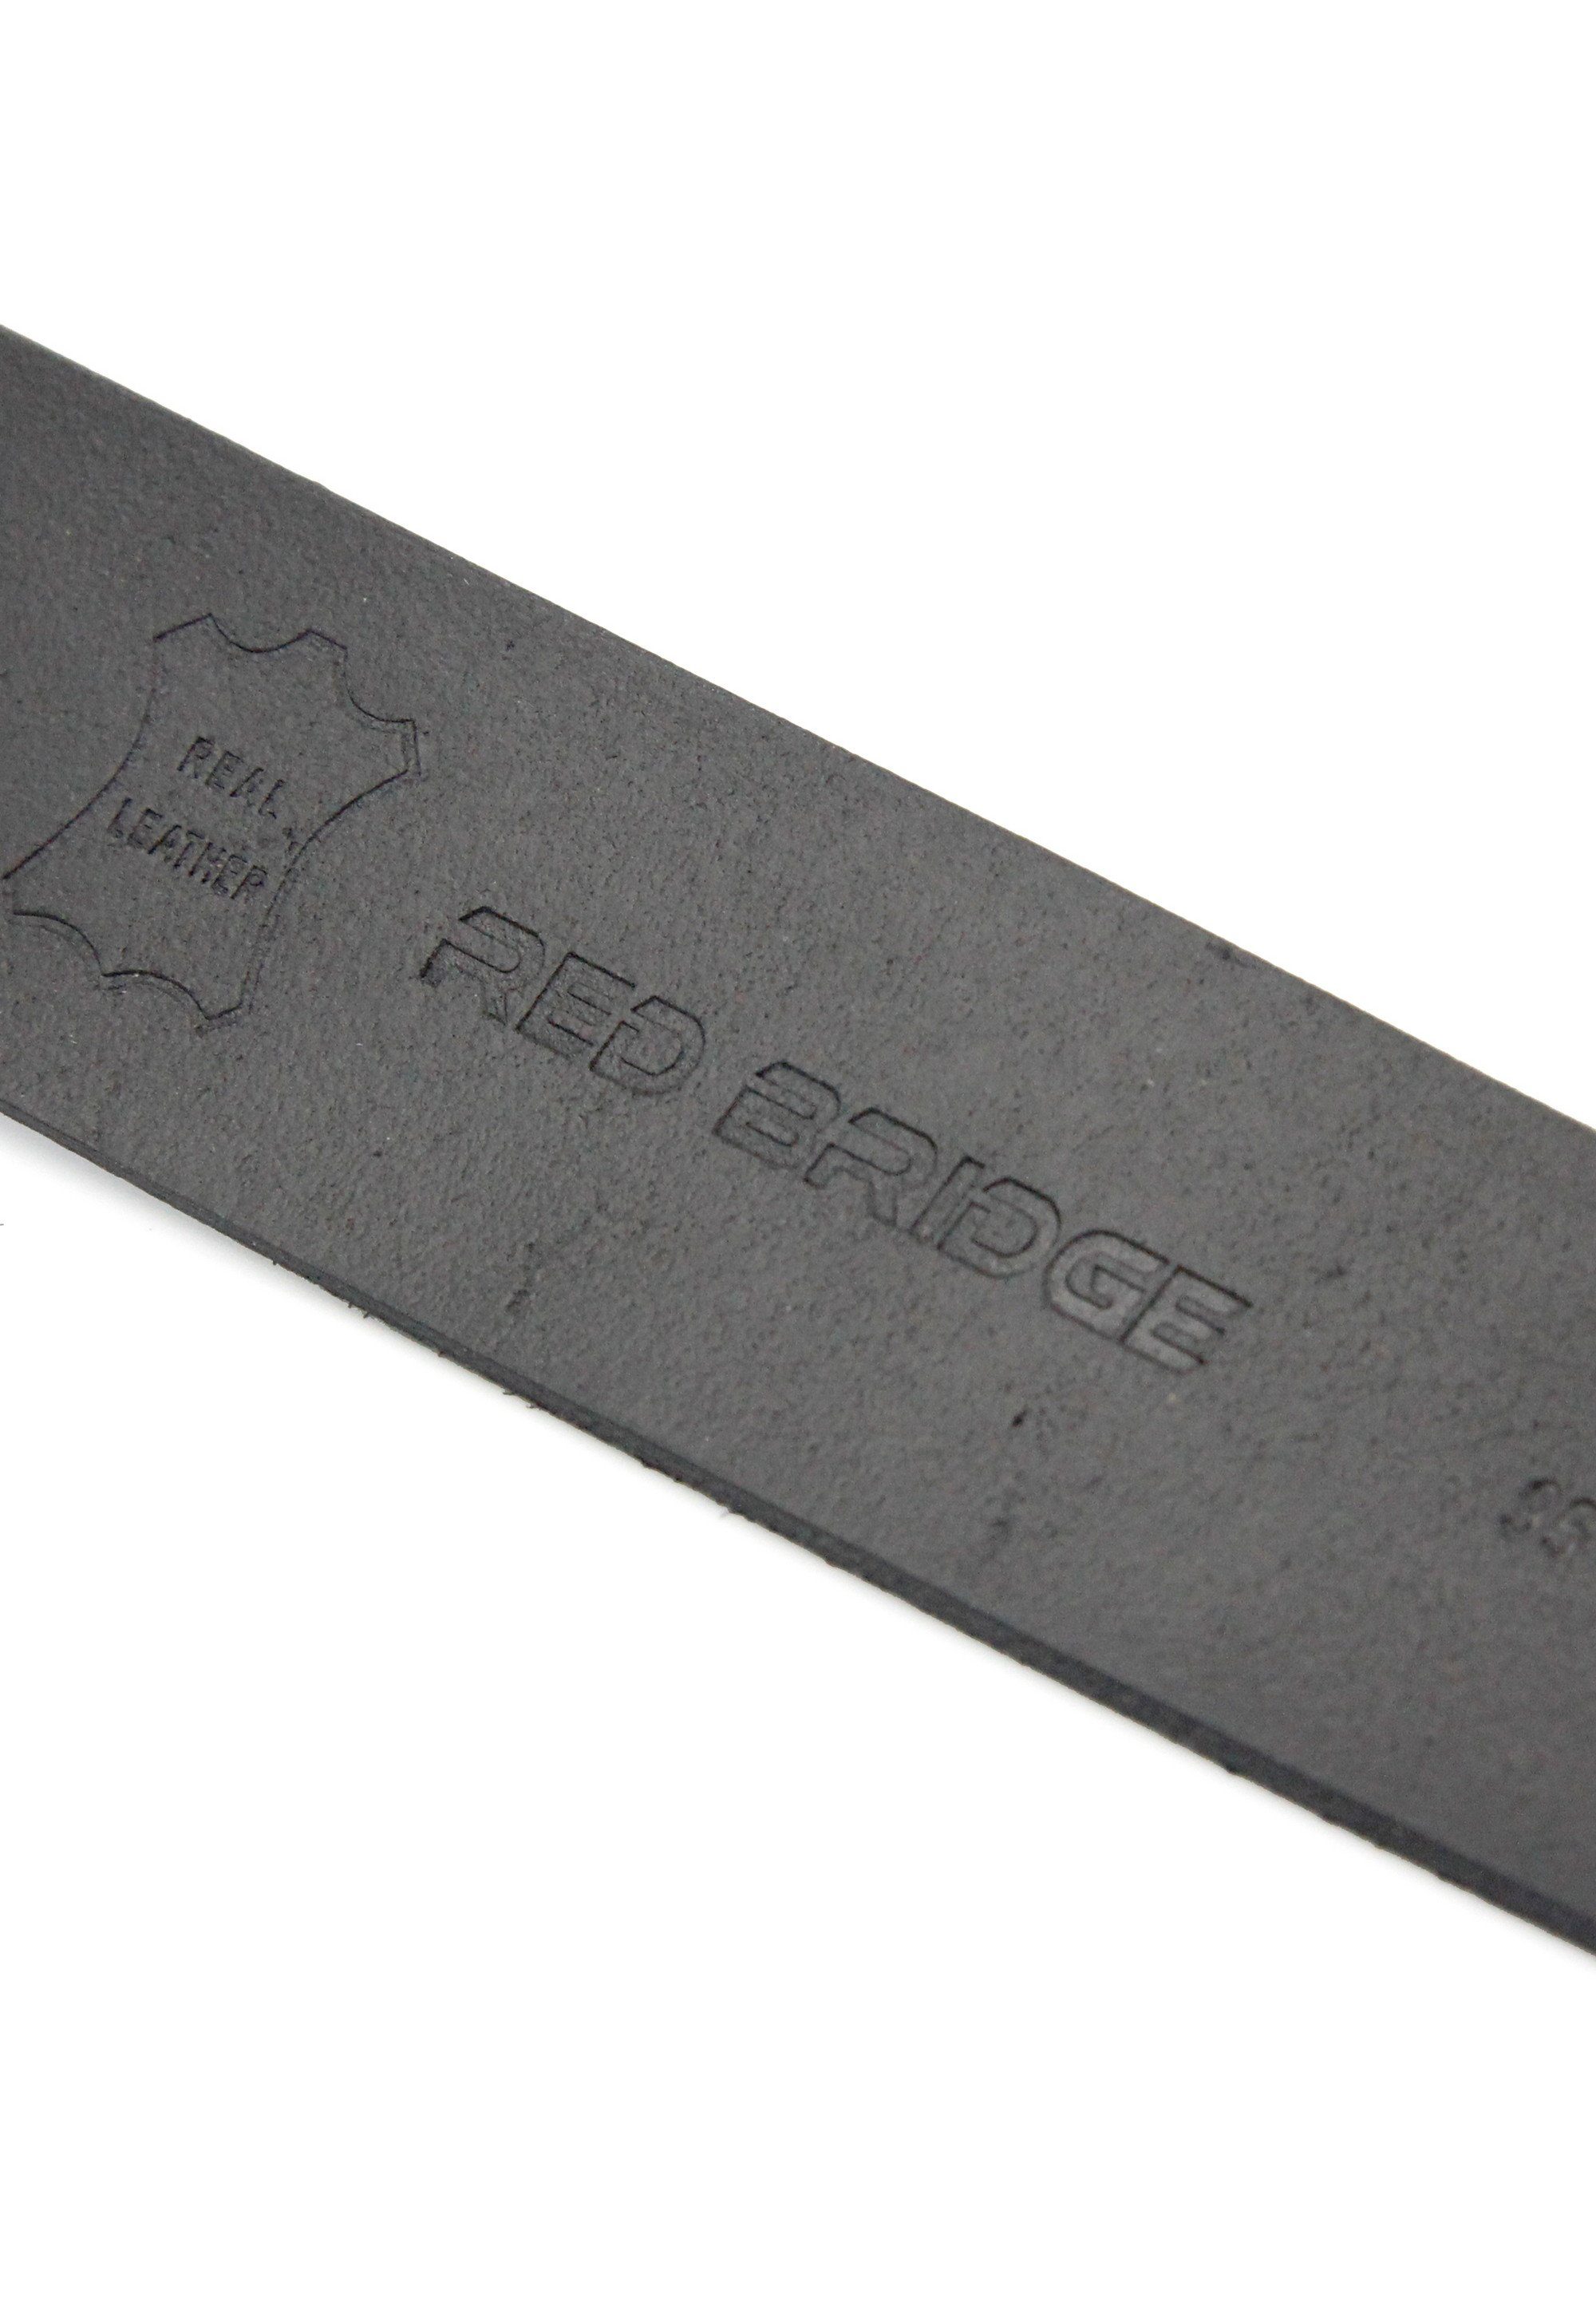 RedBridge Ledergürtel Design Frisco in dunkelblau schlichtem